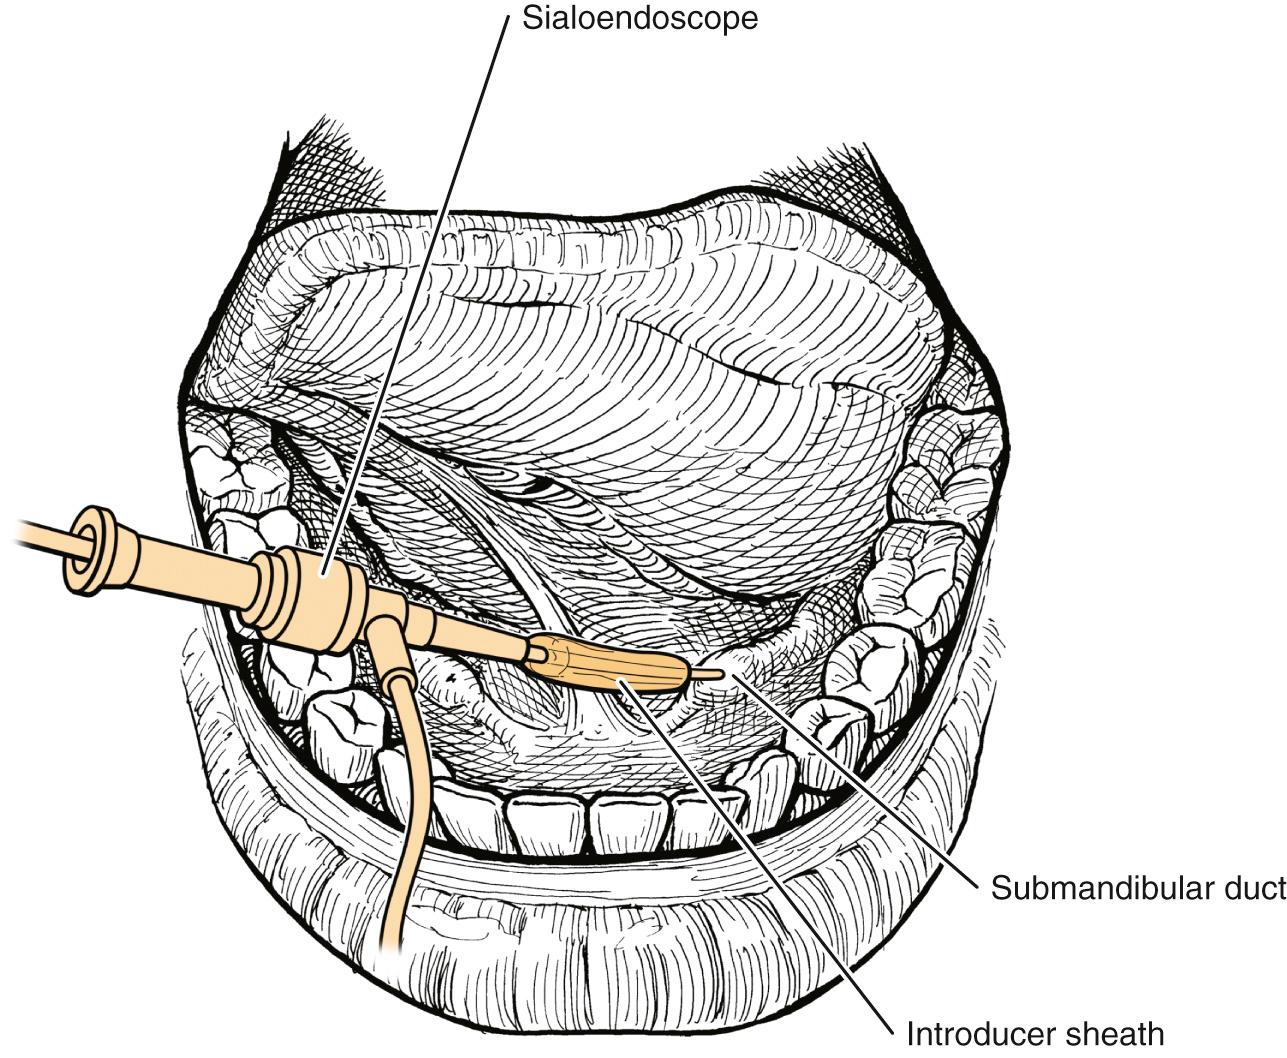 Fig. 83.3, Sialoendoscope inserted through introducer sheath in cannulated papilla of submandibular duct.